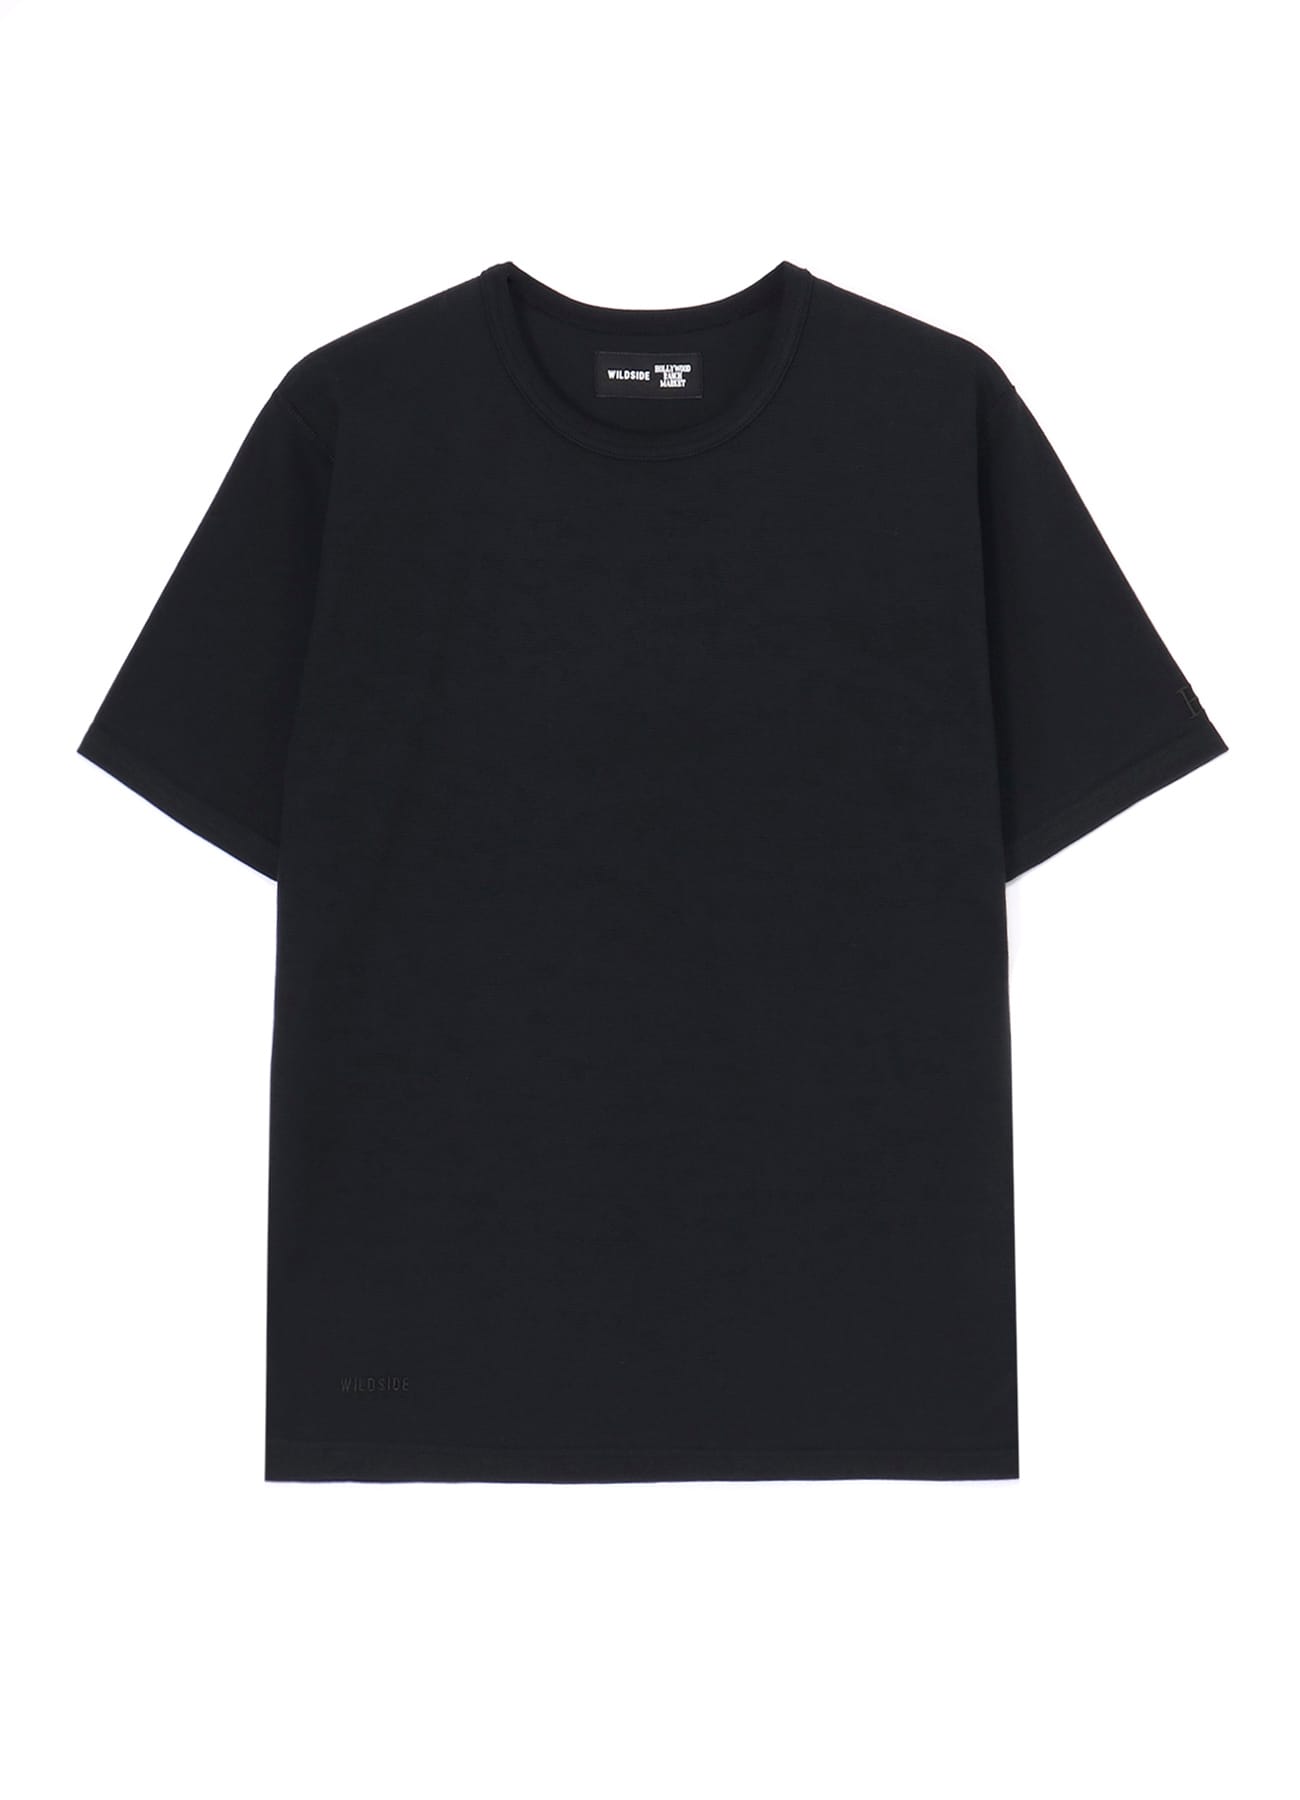 WILDSIDE × HOLLYWOOD RANCH MARKET Stretech Fraise Short Sleeve T-shirt